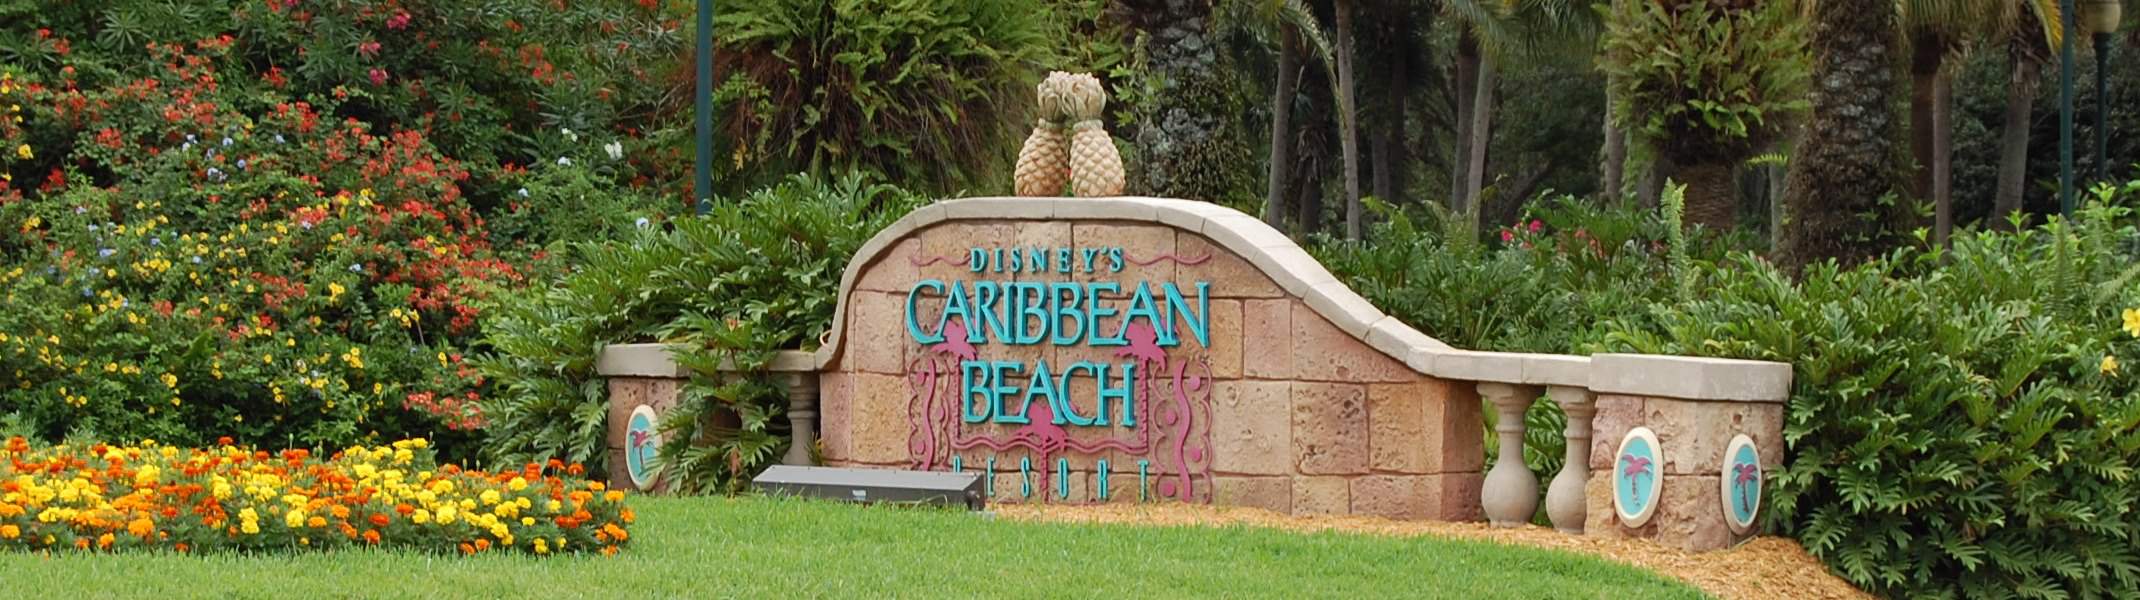 caribbean-beach-sign__compressed.jpg